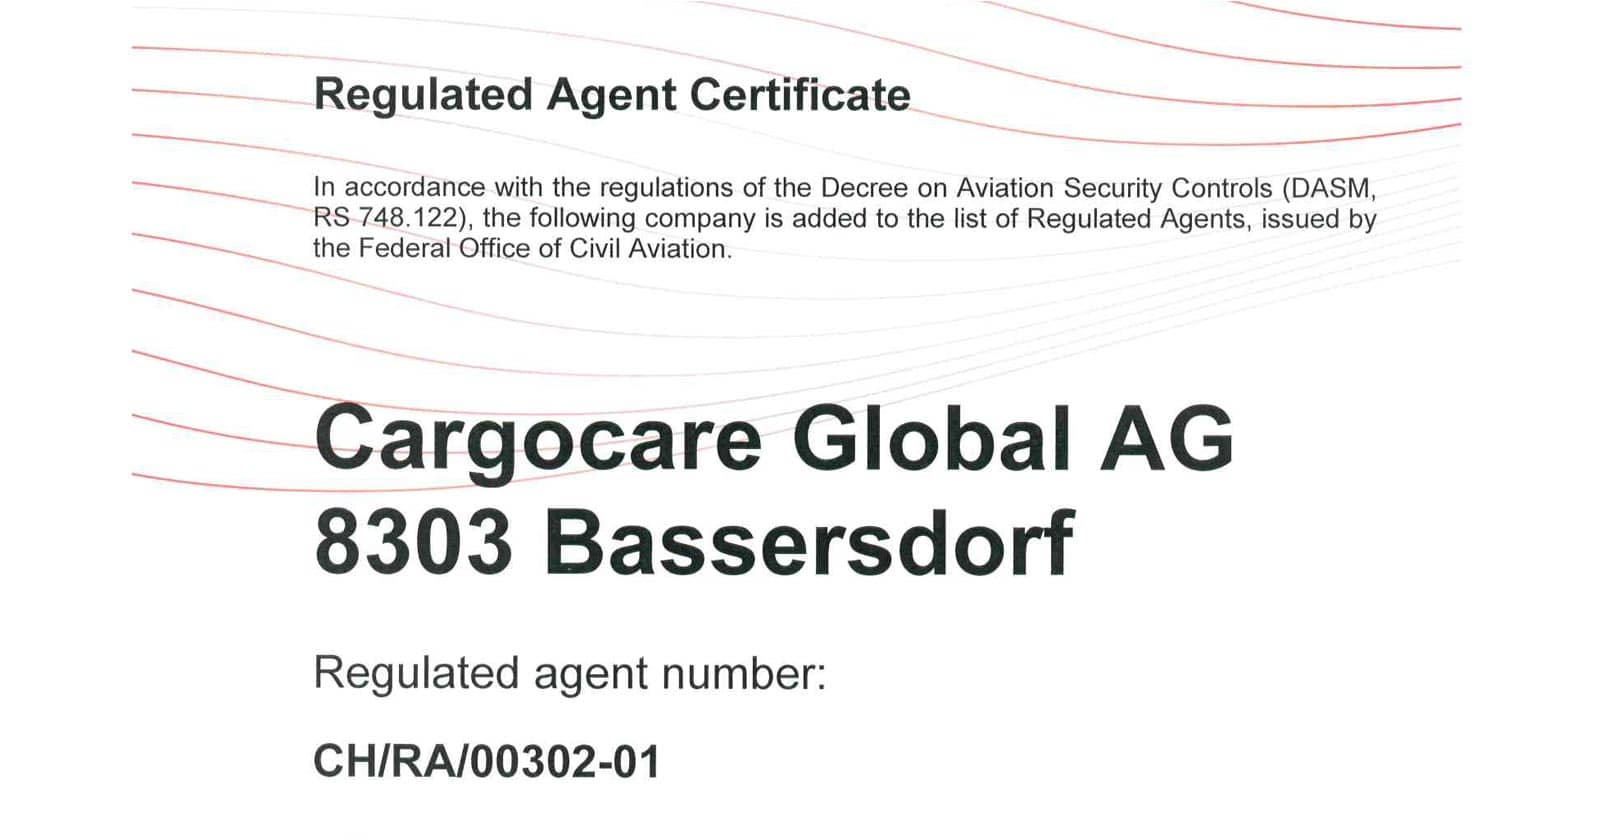 Regulated Agent Certificate